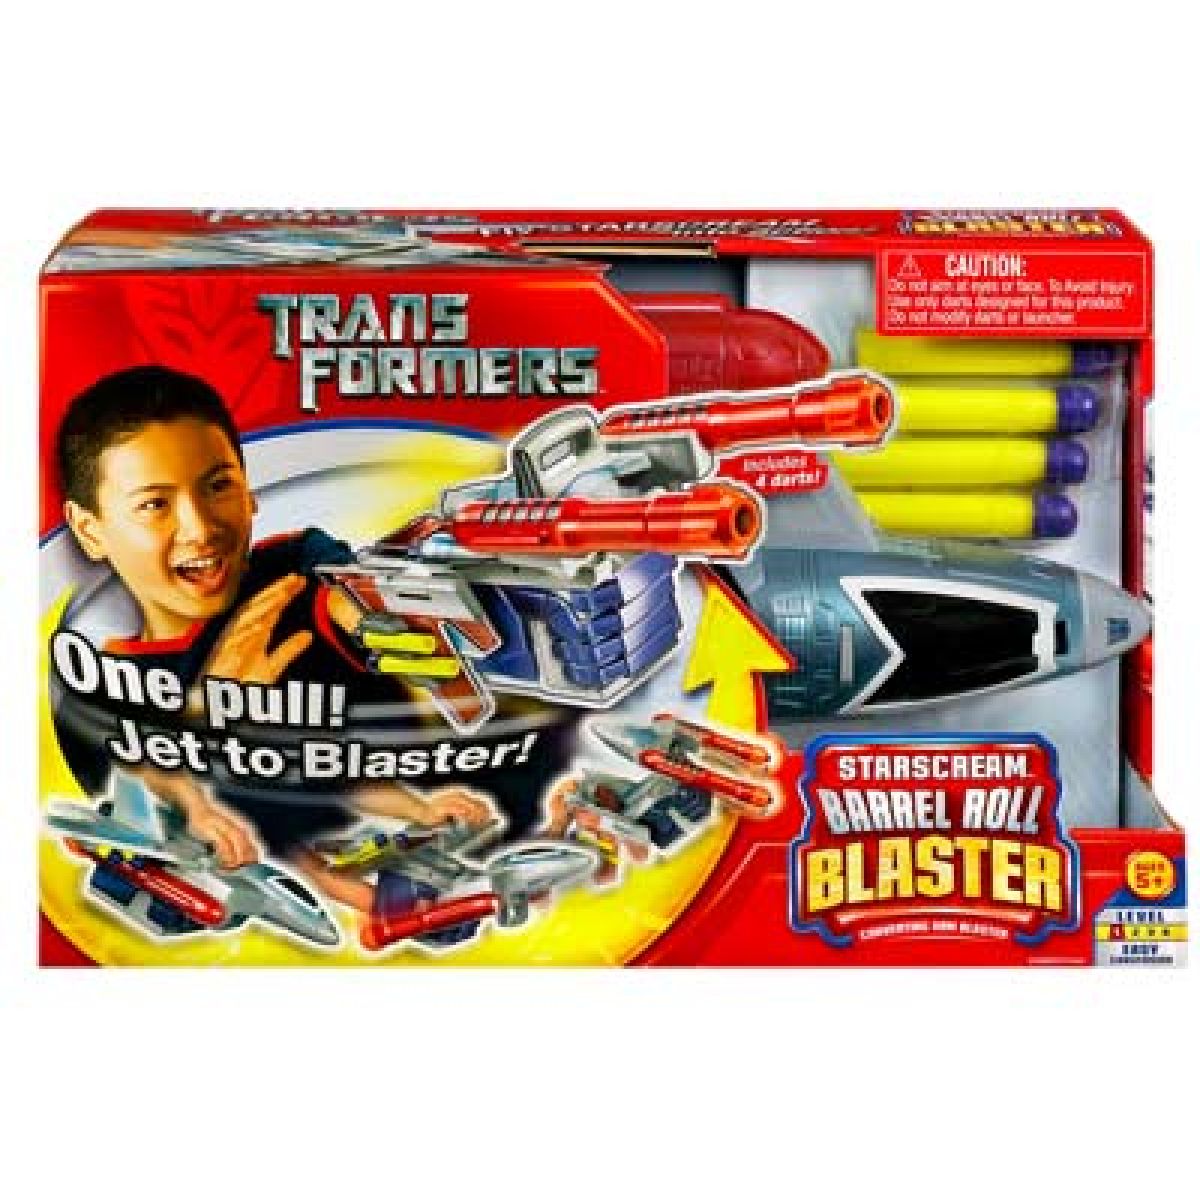 Transformers Movie Starscream Barrel Roll Blaster